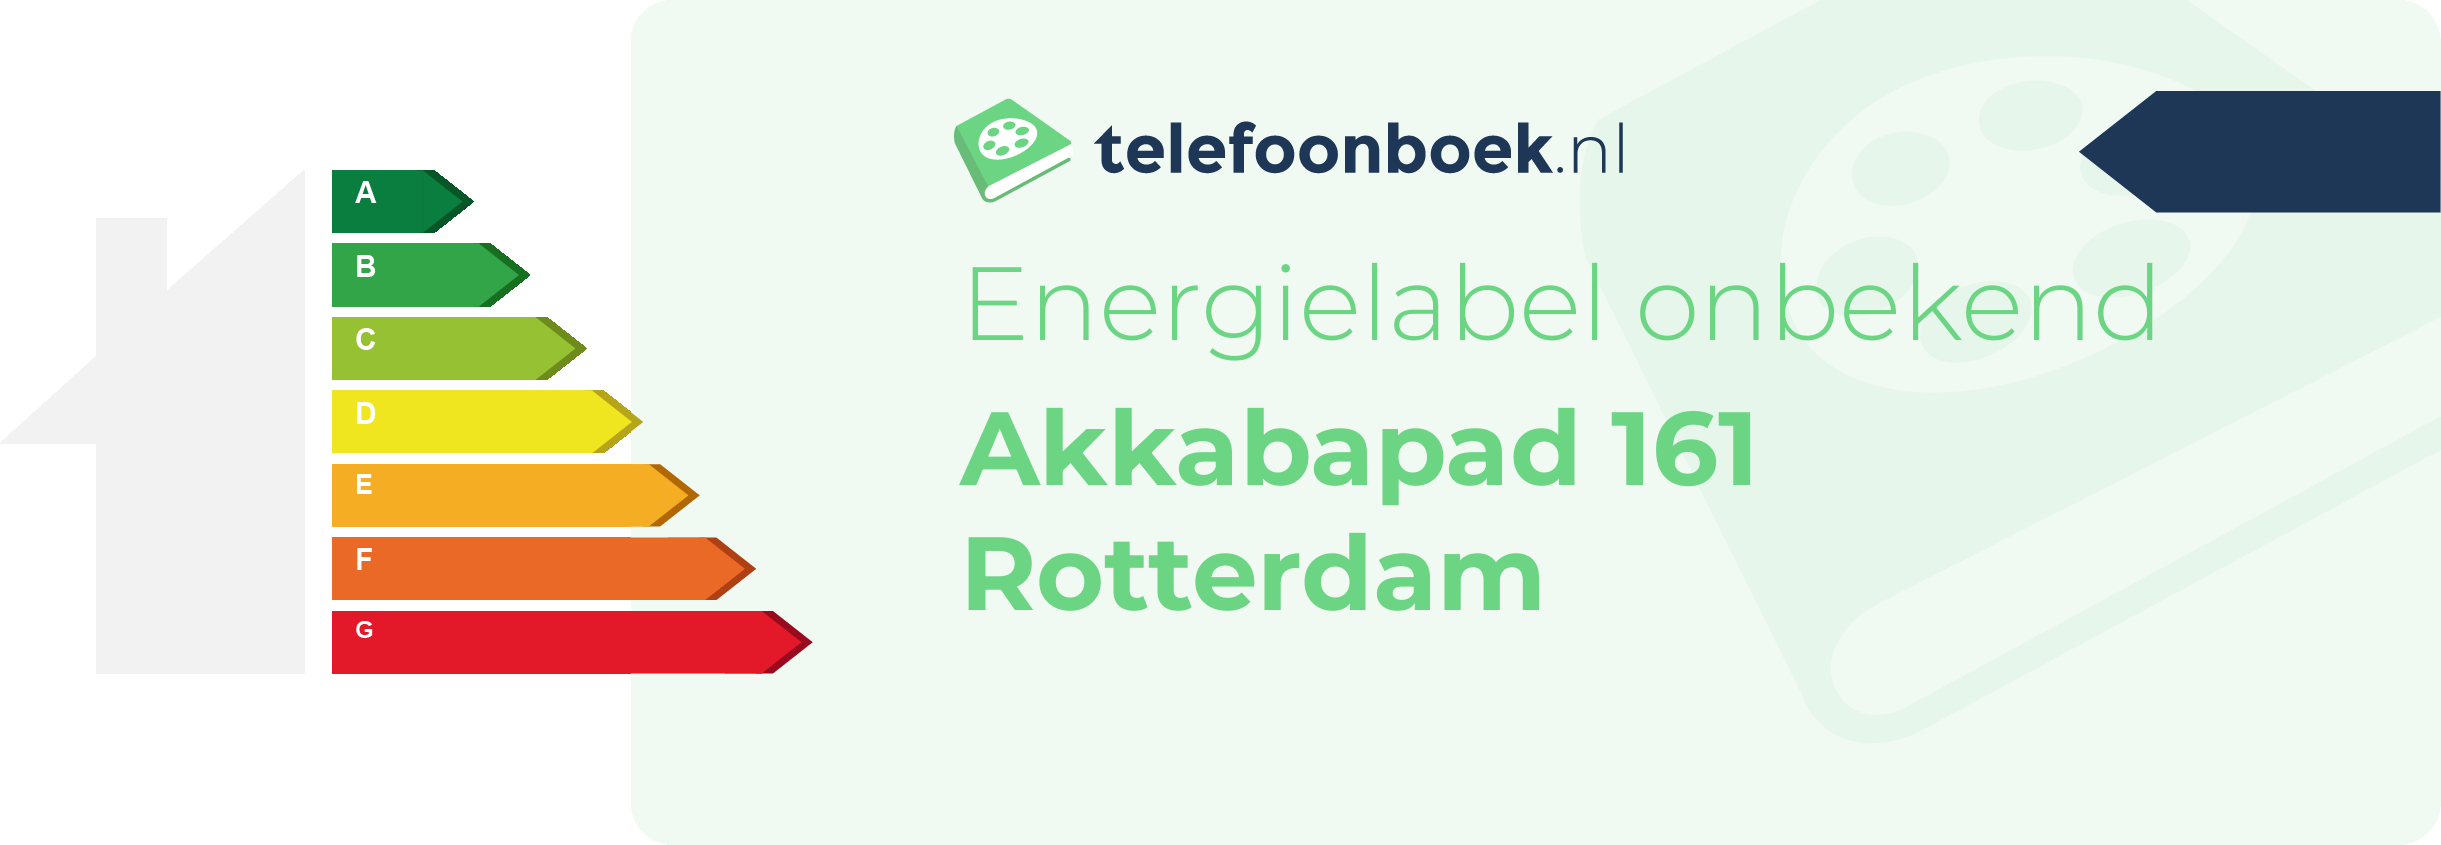 Energielabel Akkabapad 161 Rotterdam